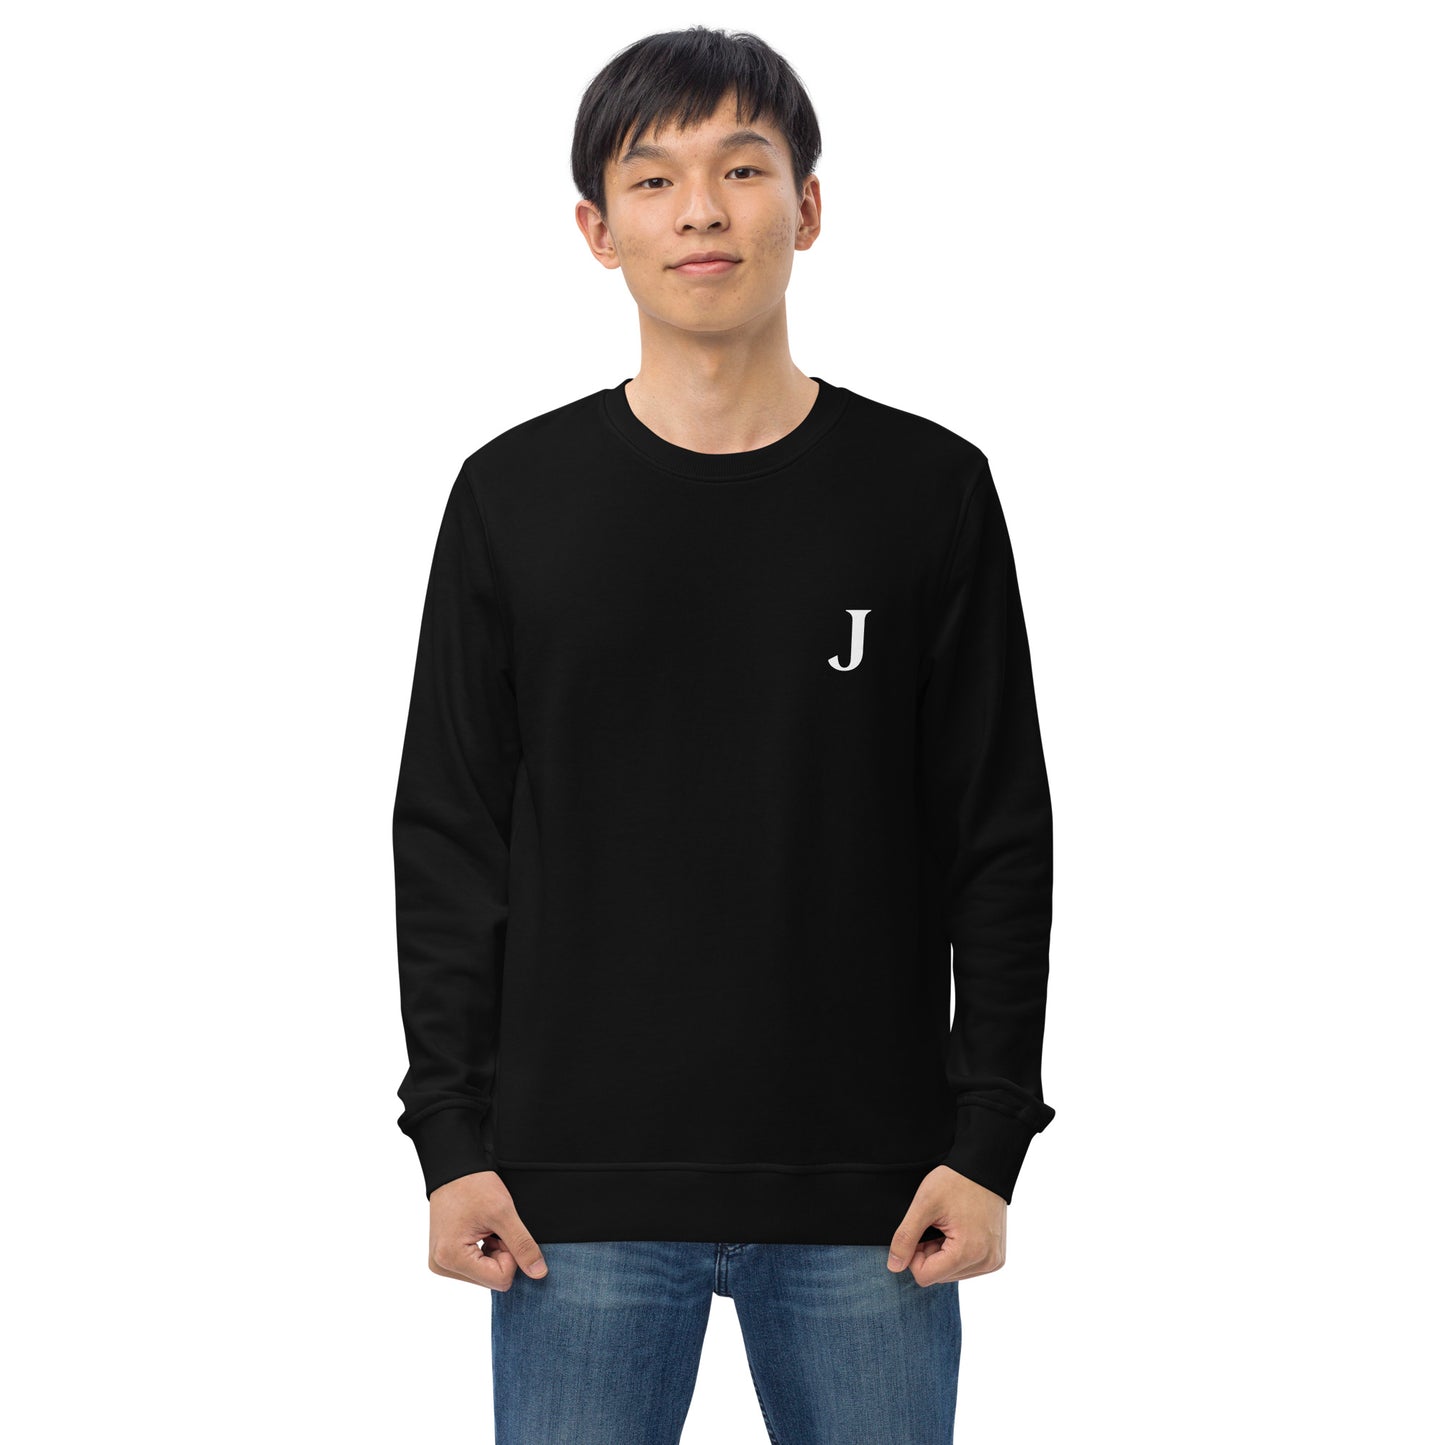 The Juggernaut Collection - Small "J" Sweatshirt